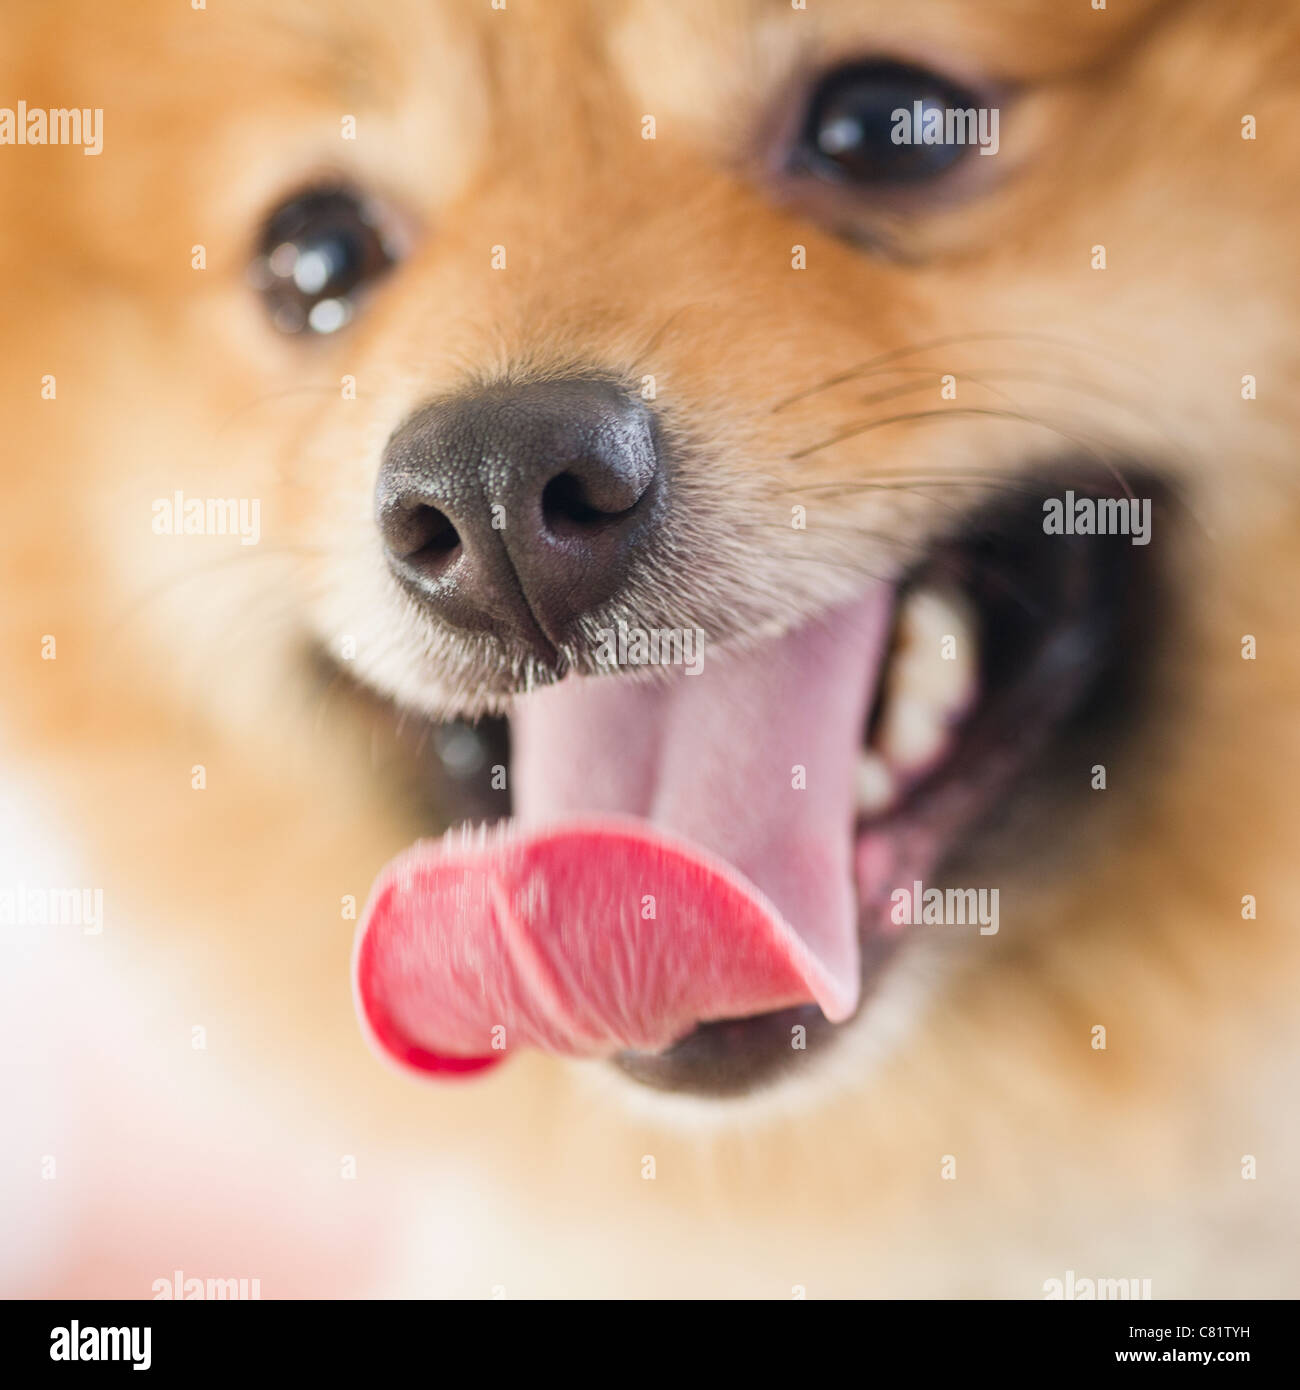 Close up of Pomeranian dog's face Stock Photo